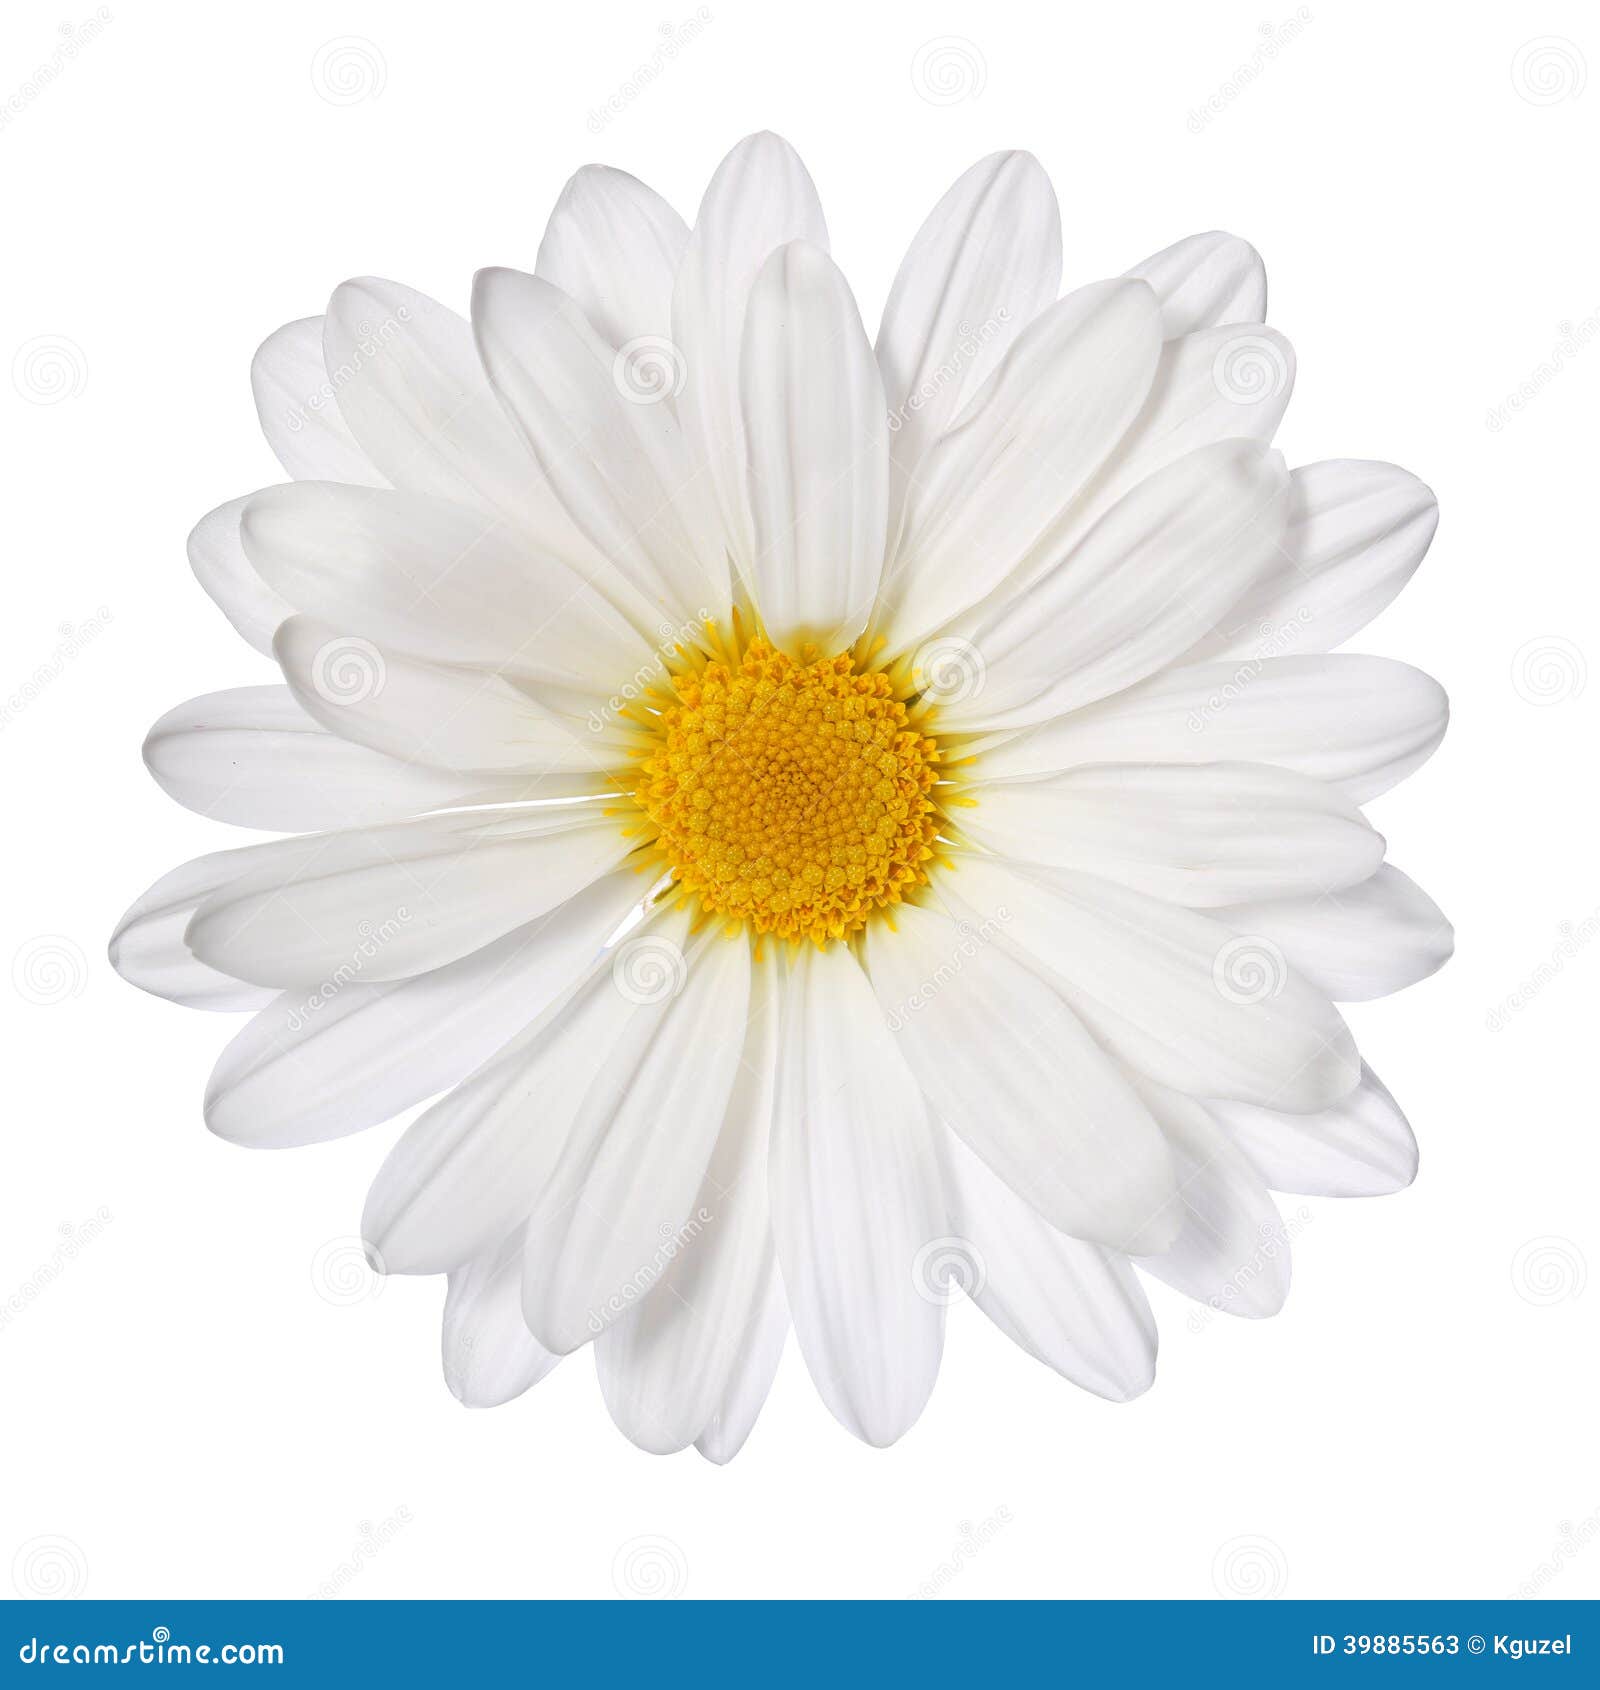 chamomile flower  on white. daisy.